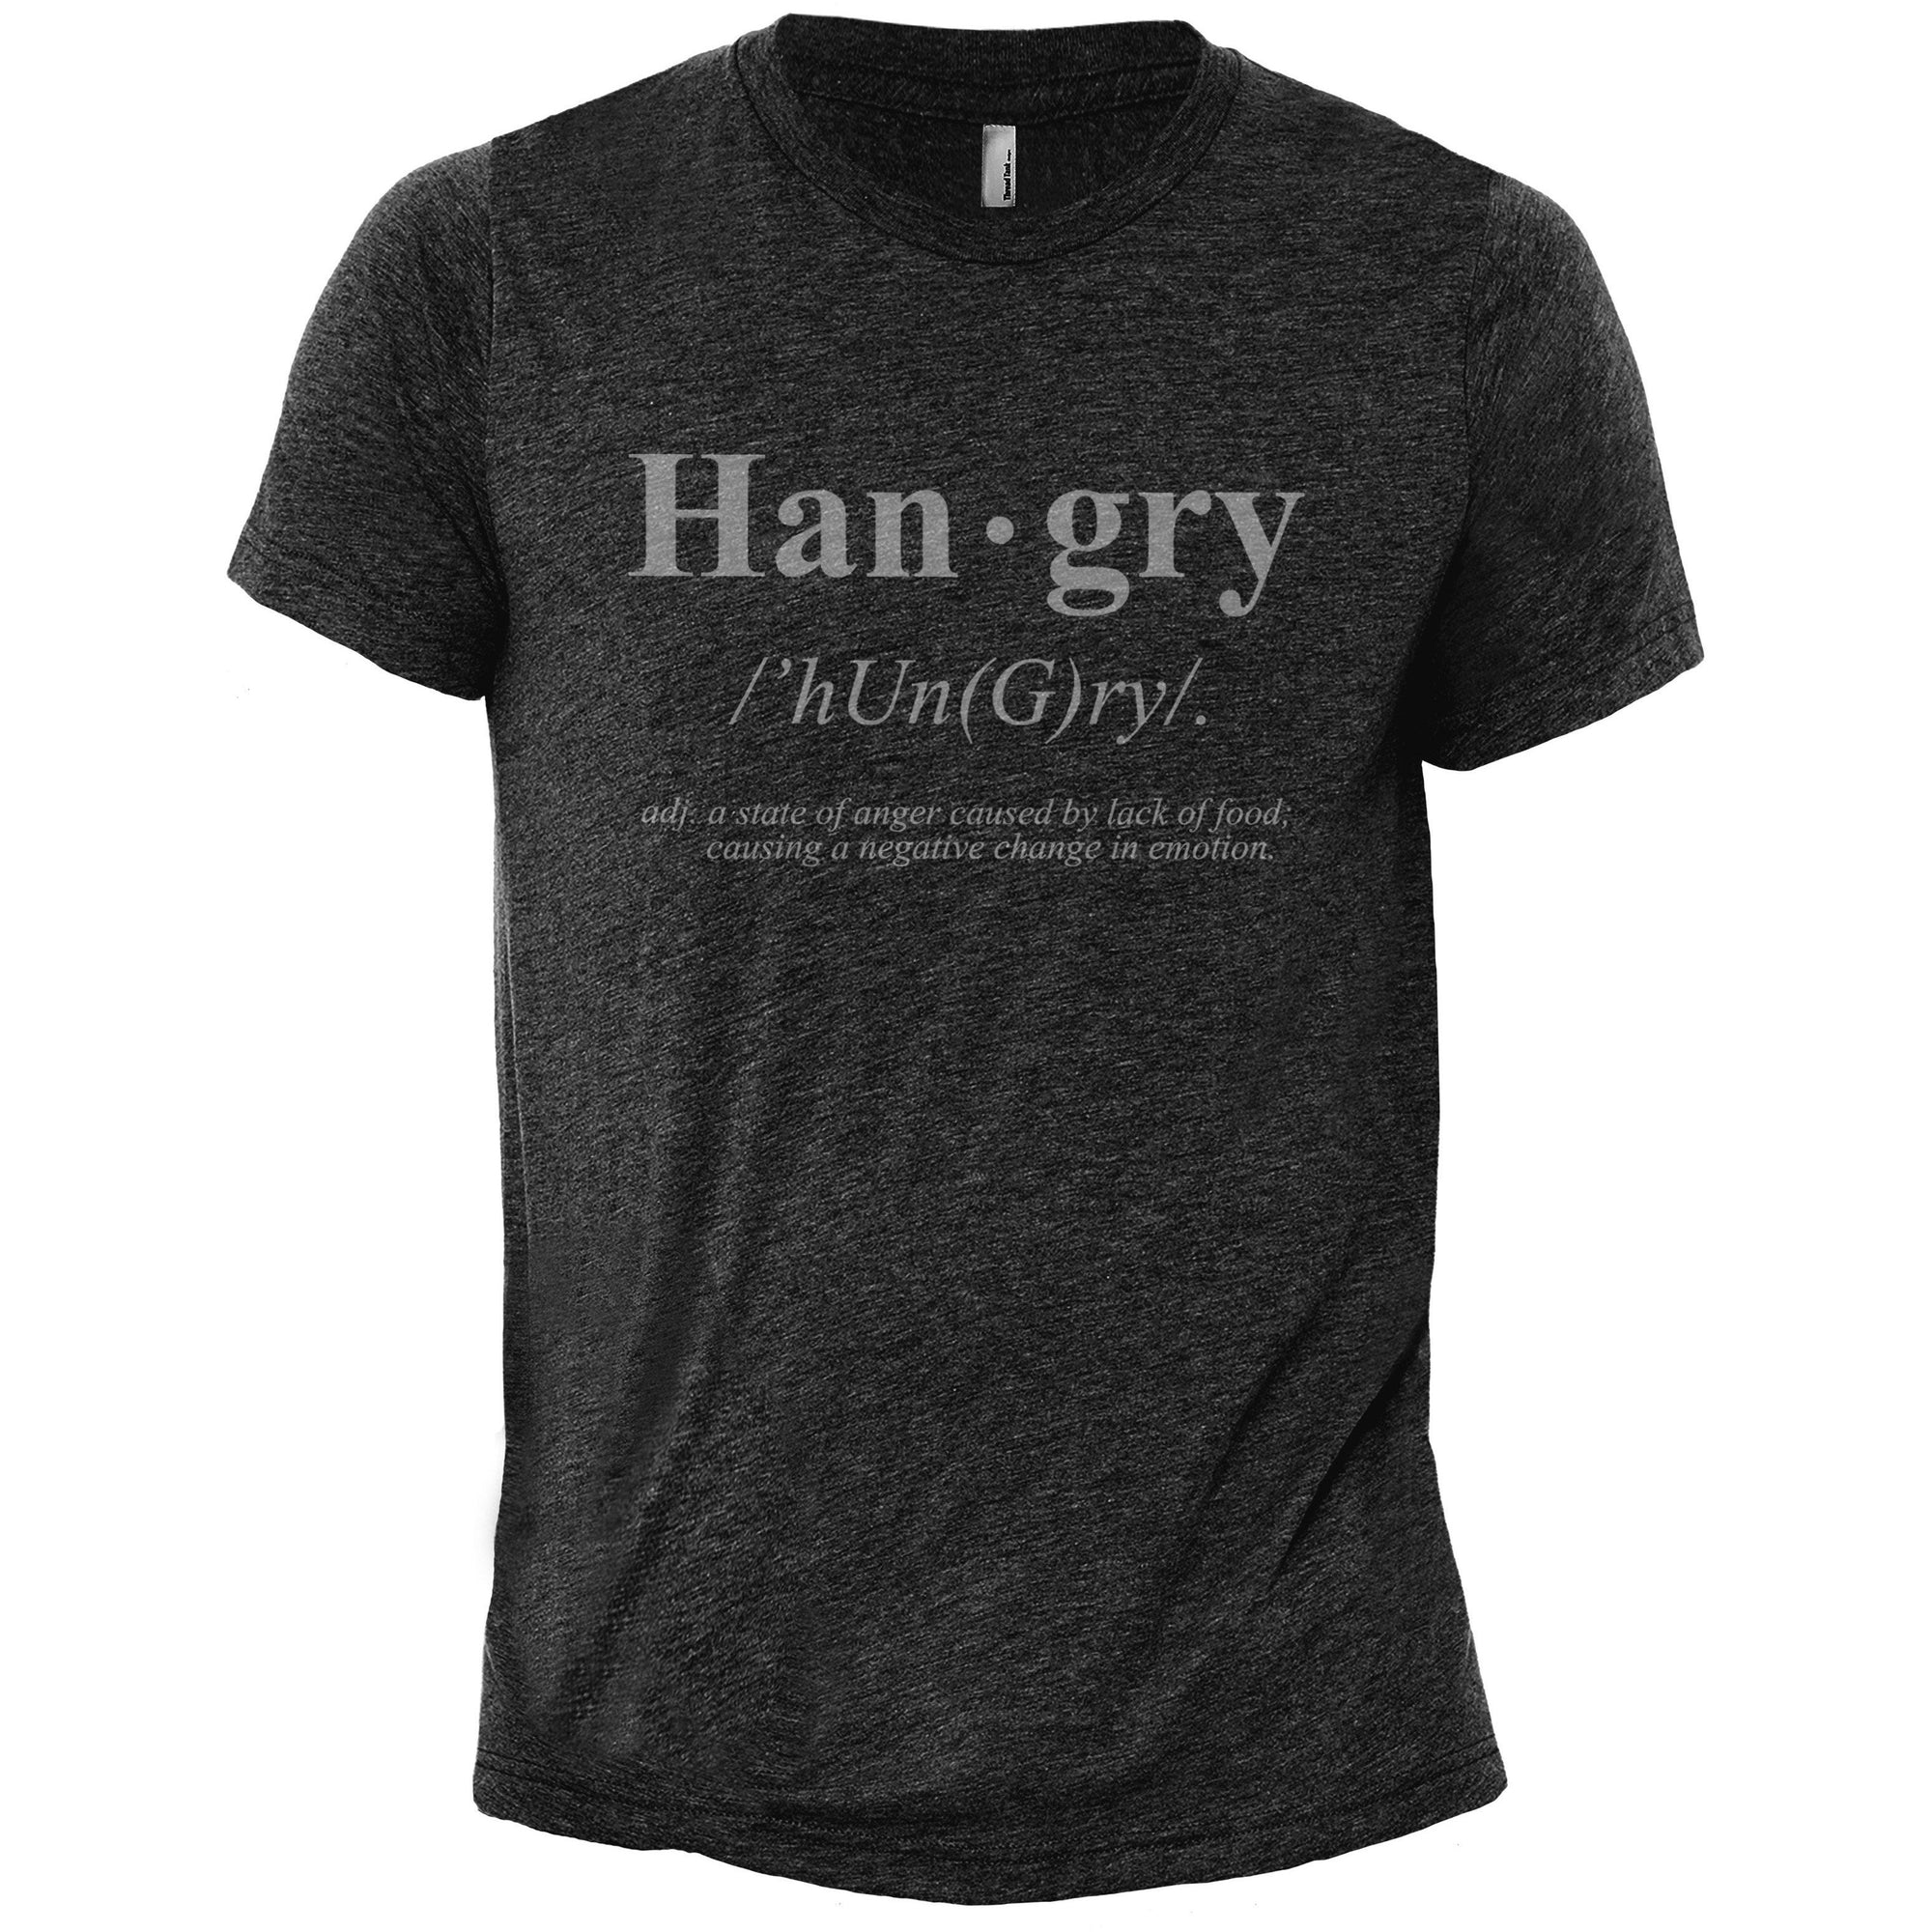 HanGry Heather Grey Printed Graphic Men's Crew T-Shirt Tee